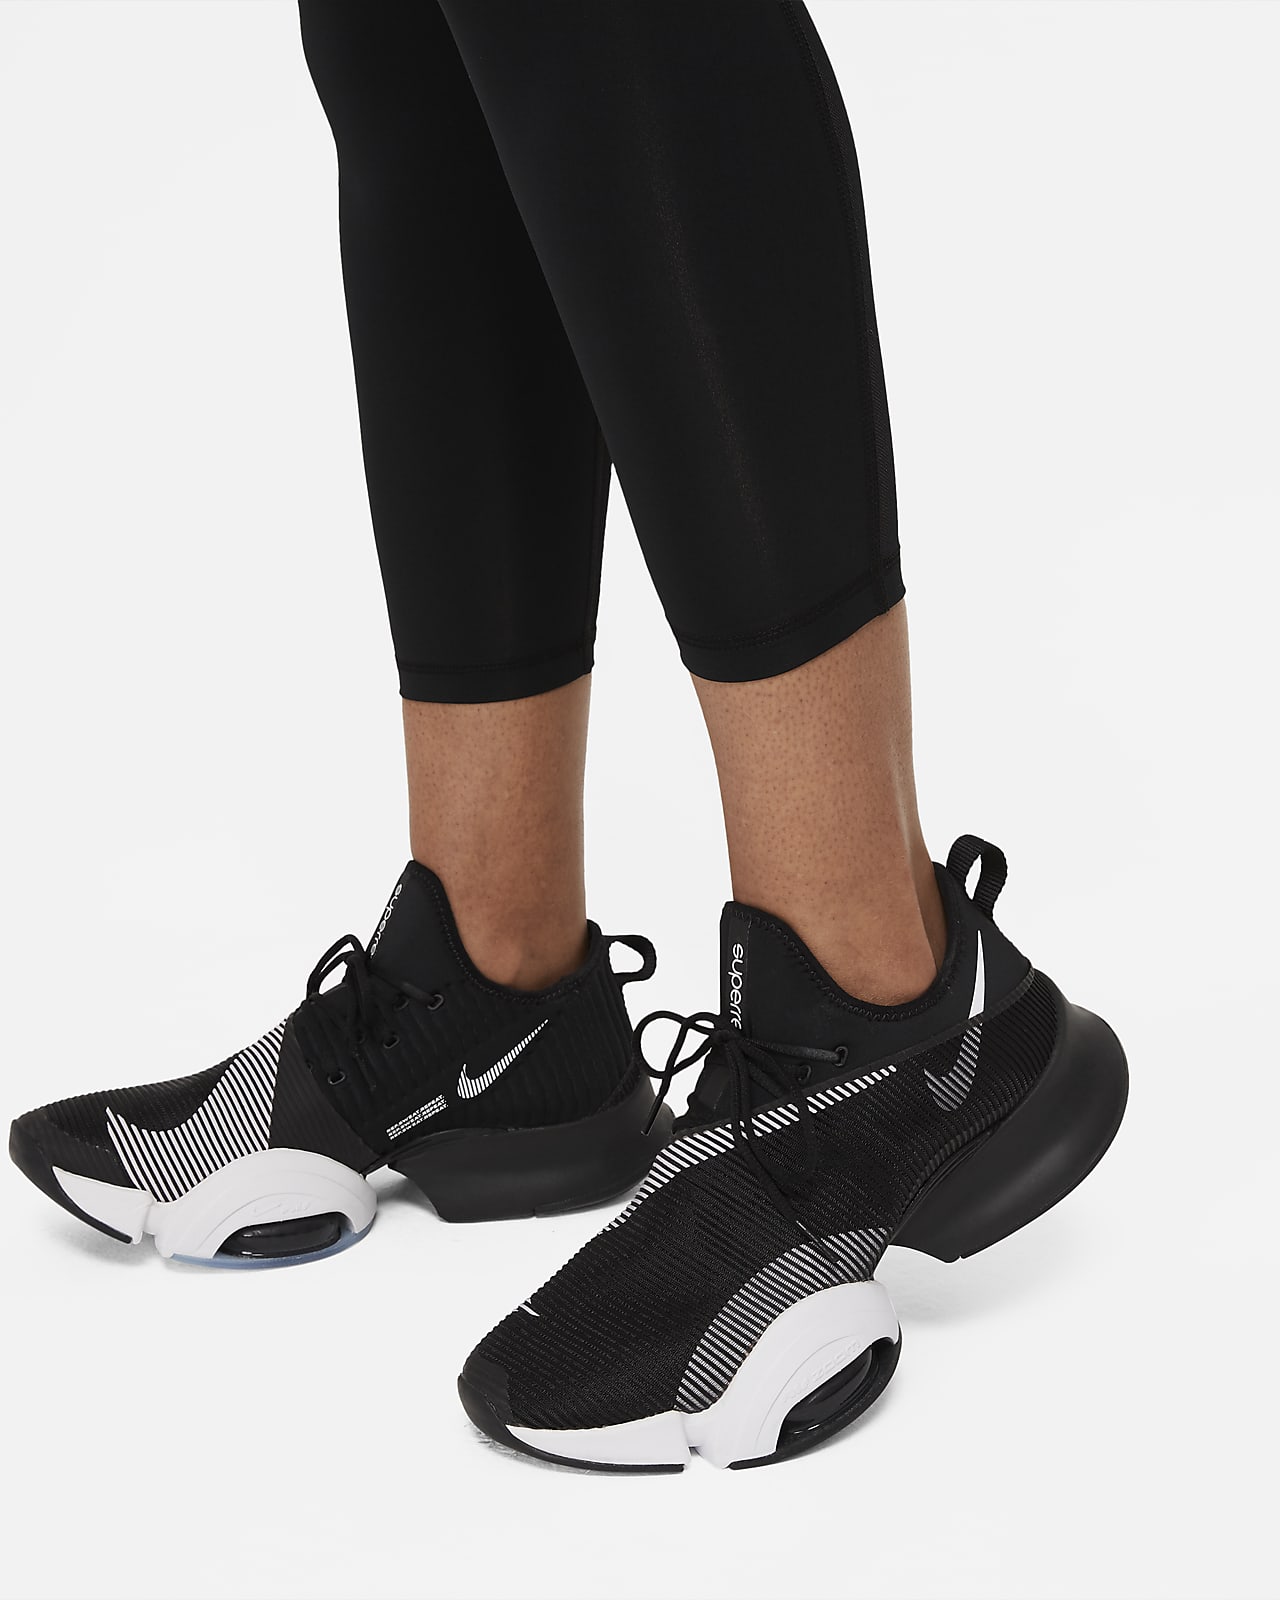 Nike PRO 7/8 High Rise Women's Leggings (Black/Habanero) Size